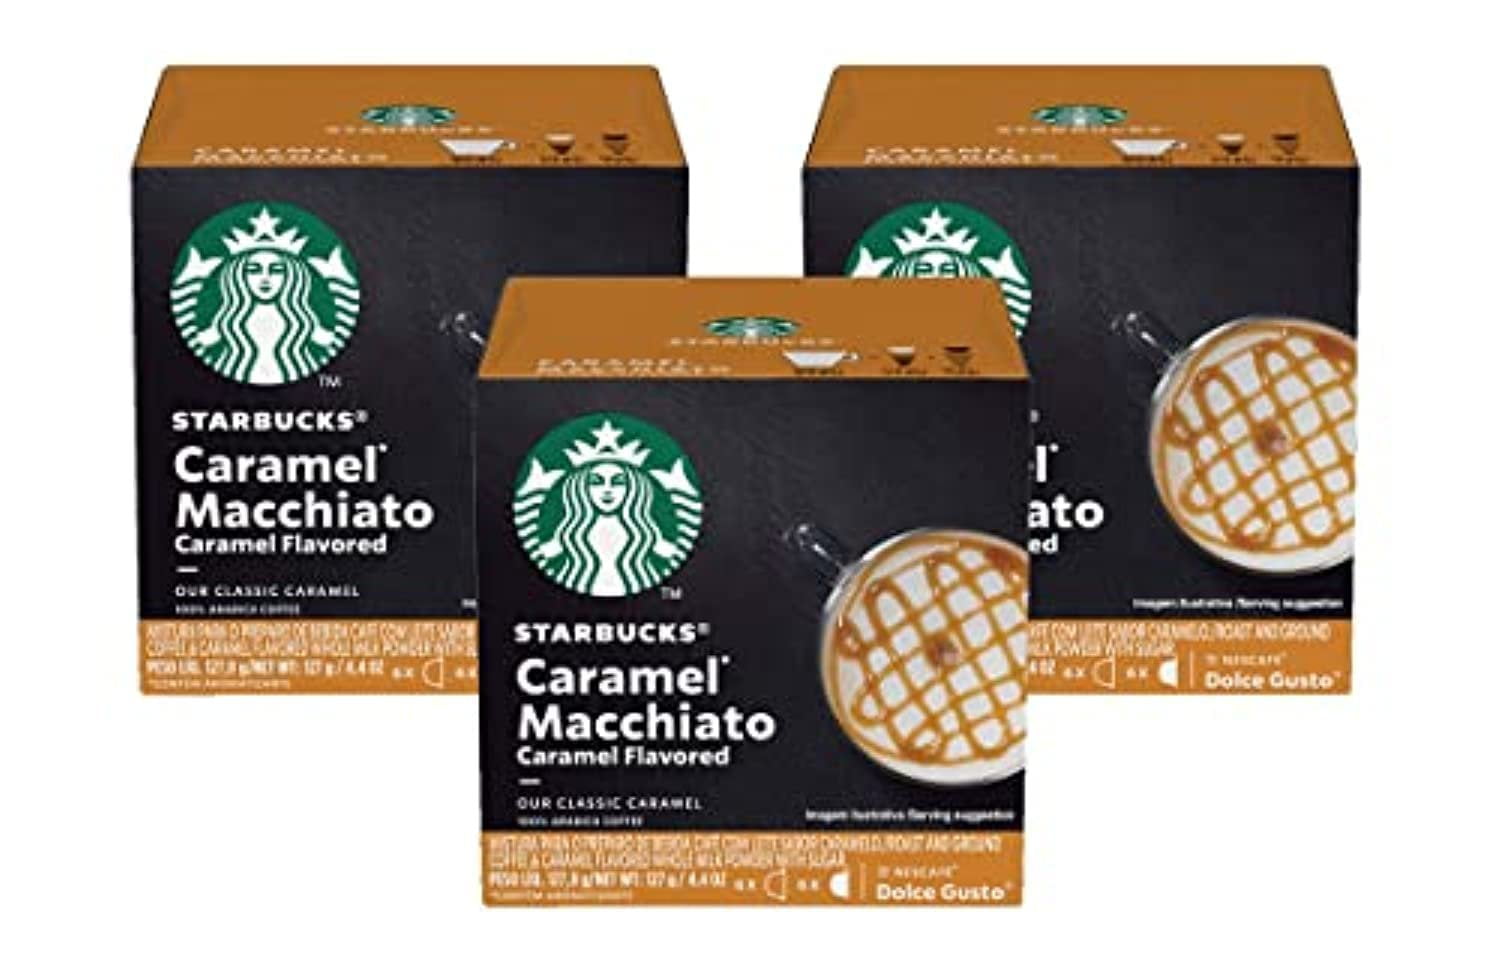 Starbucks by Nescafé Dolce Gusto Latte Macchiato Coffee x12 Pods, 6 Drinks